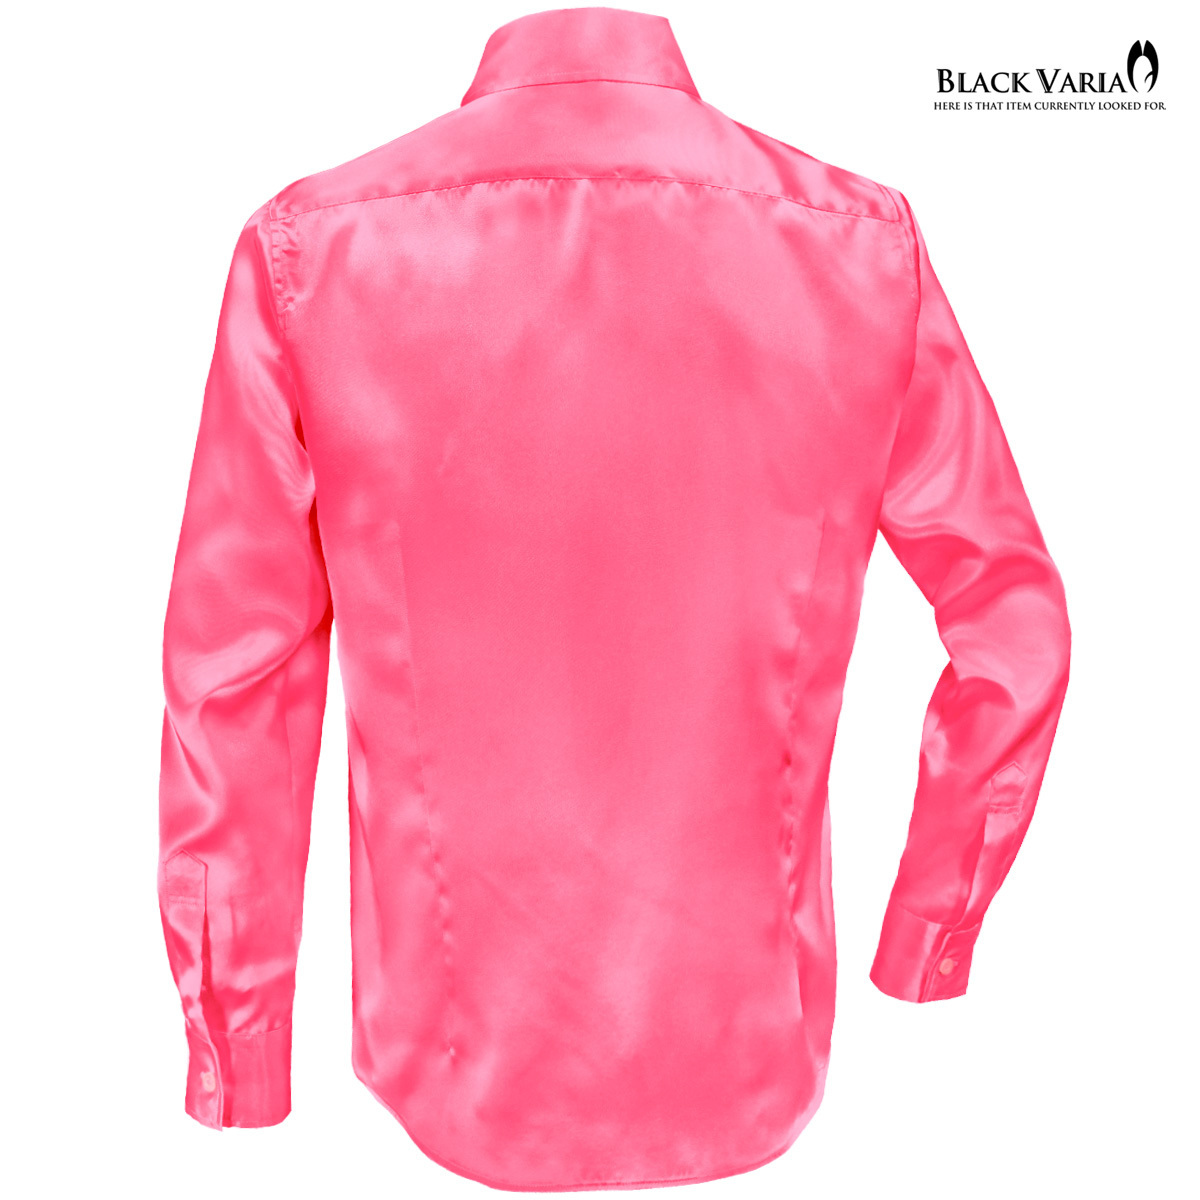  cat pohs possible *141405-pk BLACK VARIA lustre satin plain slim regular color dress shirt men's ( car i knee pink ) SS costume 